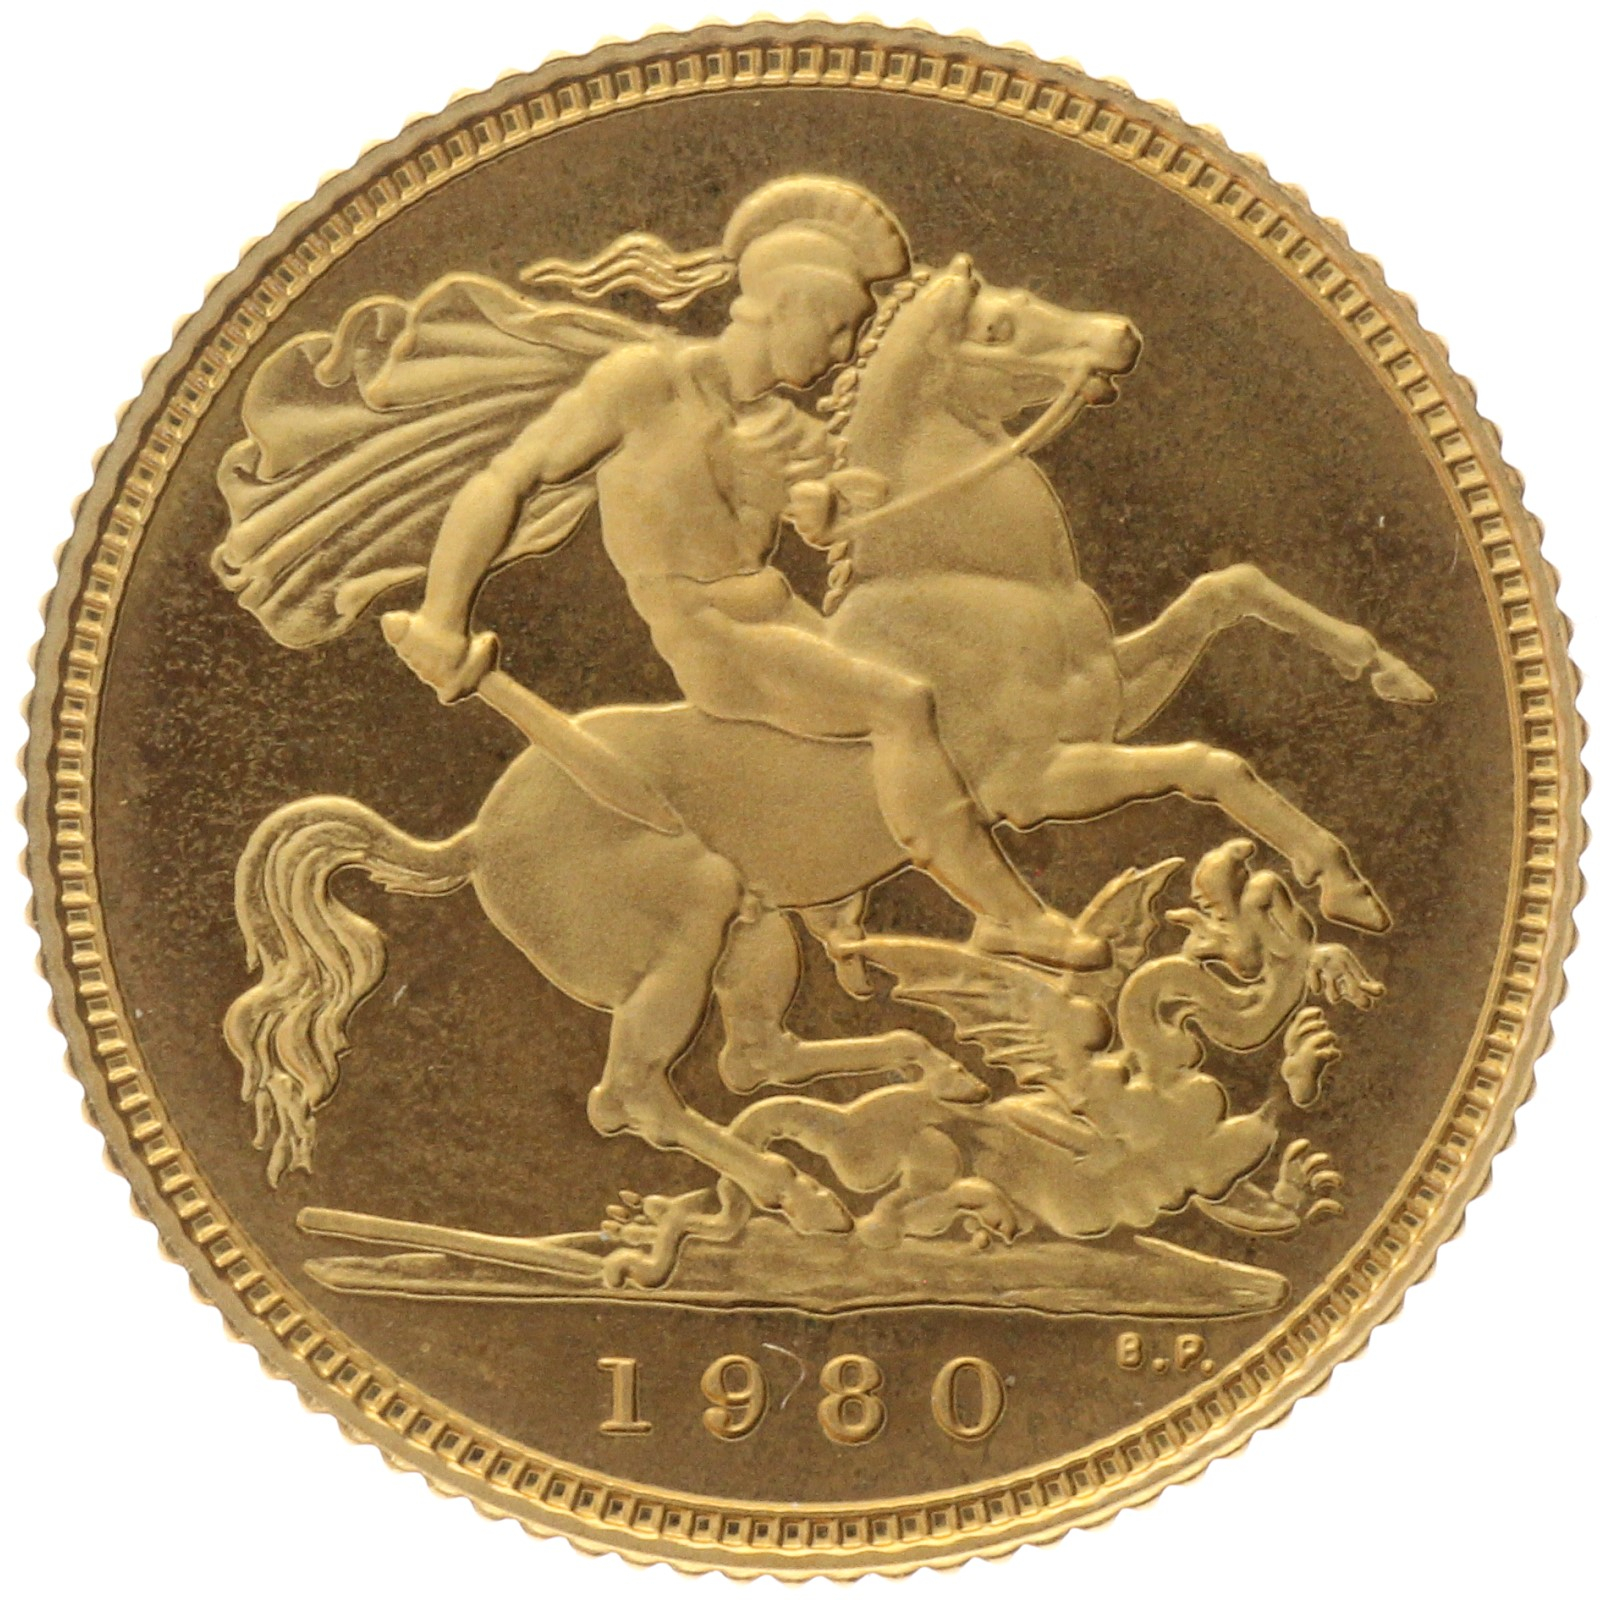 United Kingdom - ½ Sovereign - 1980 - Elizabeth II - PROOF